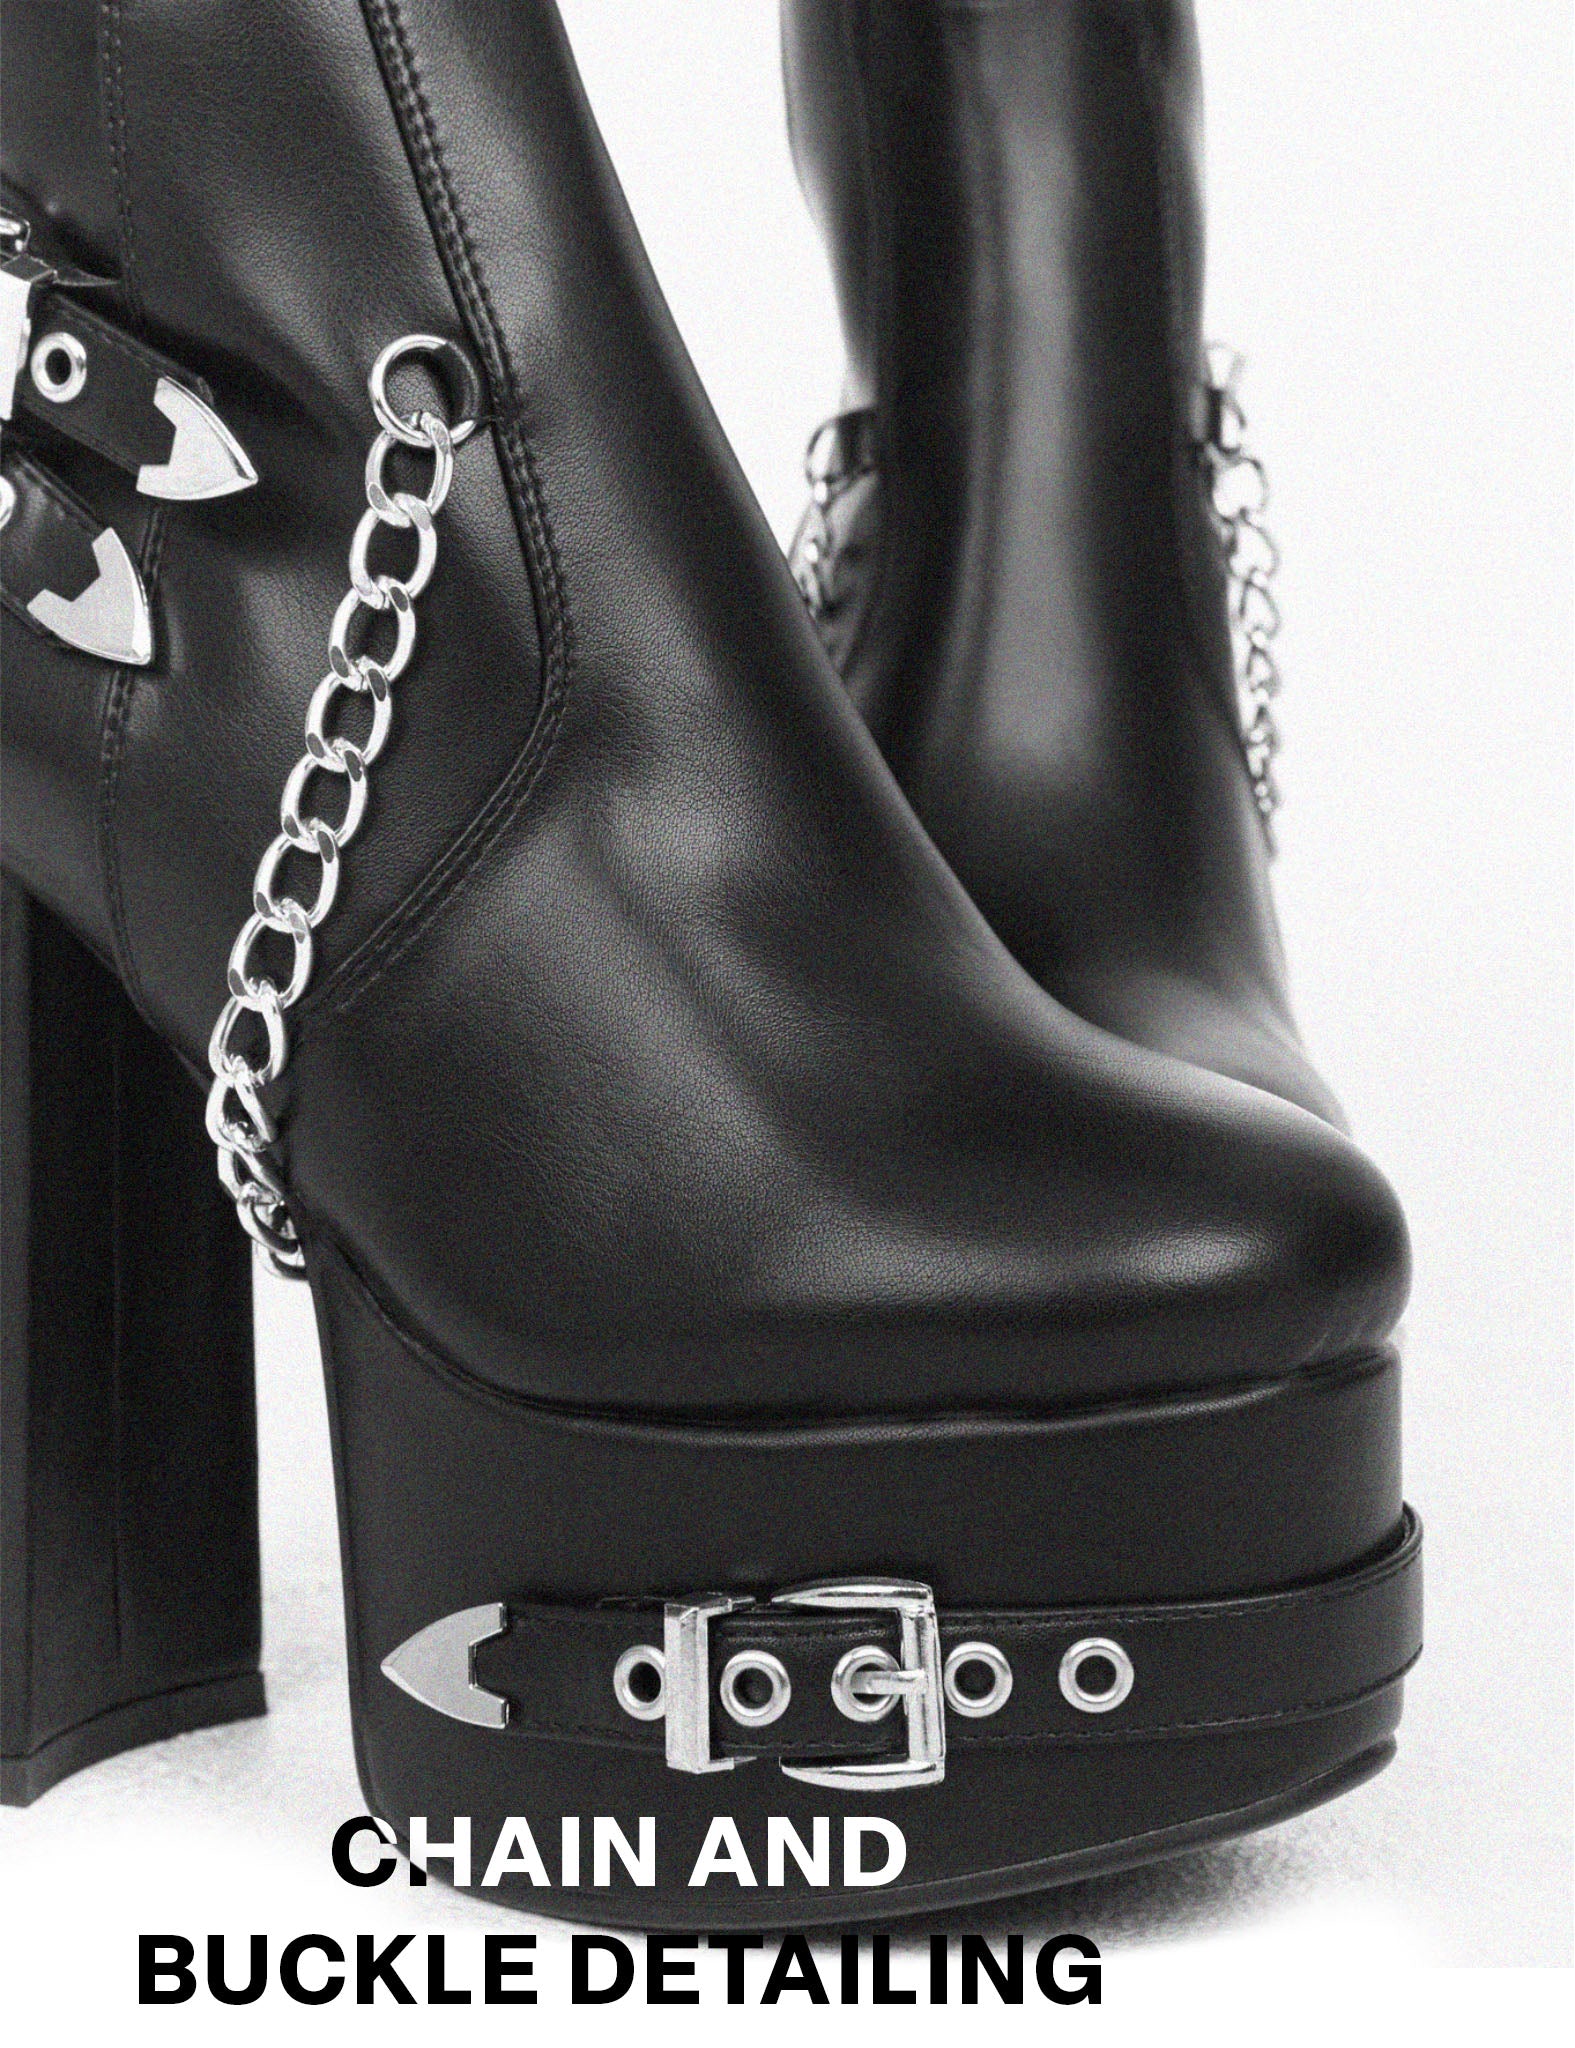 Lamoda Scream Platform Thigh High Boots Vegan Leather